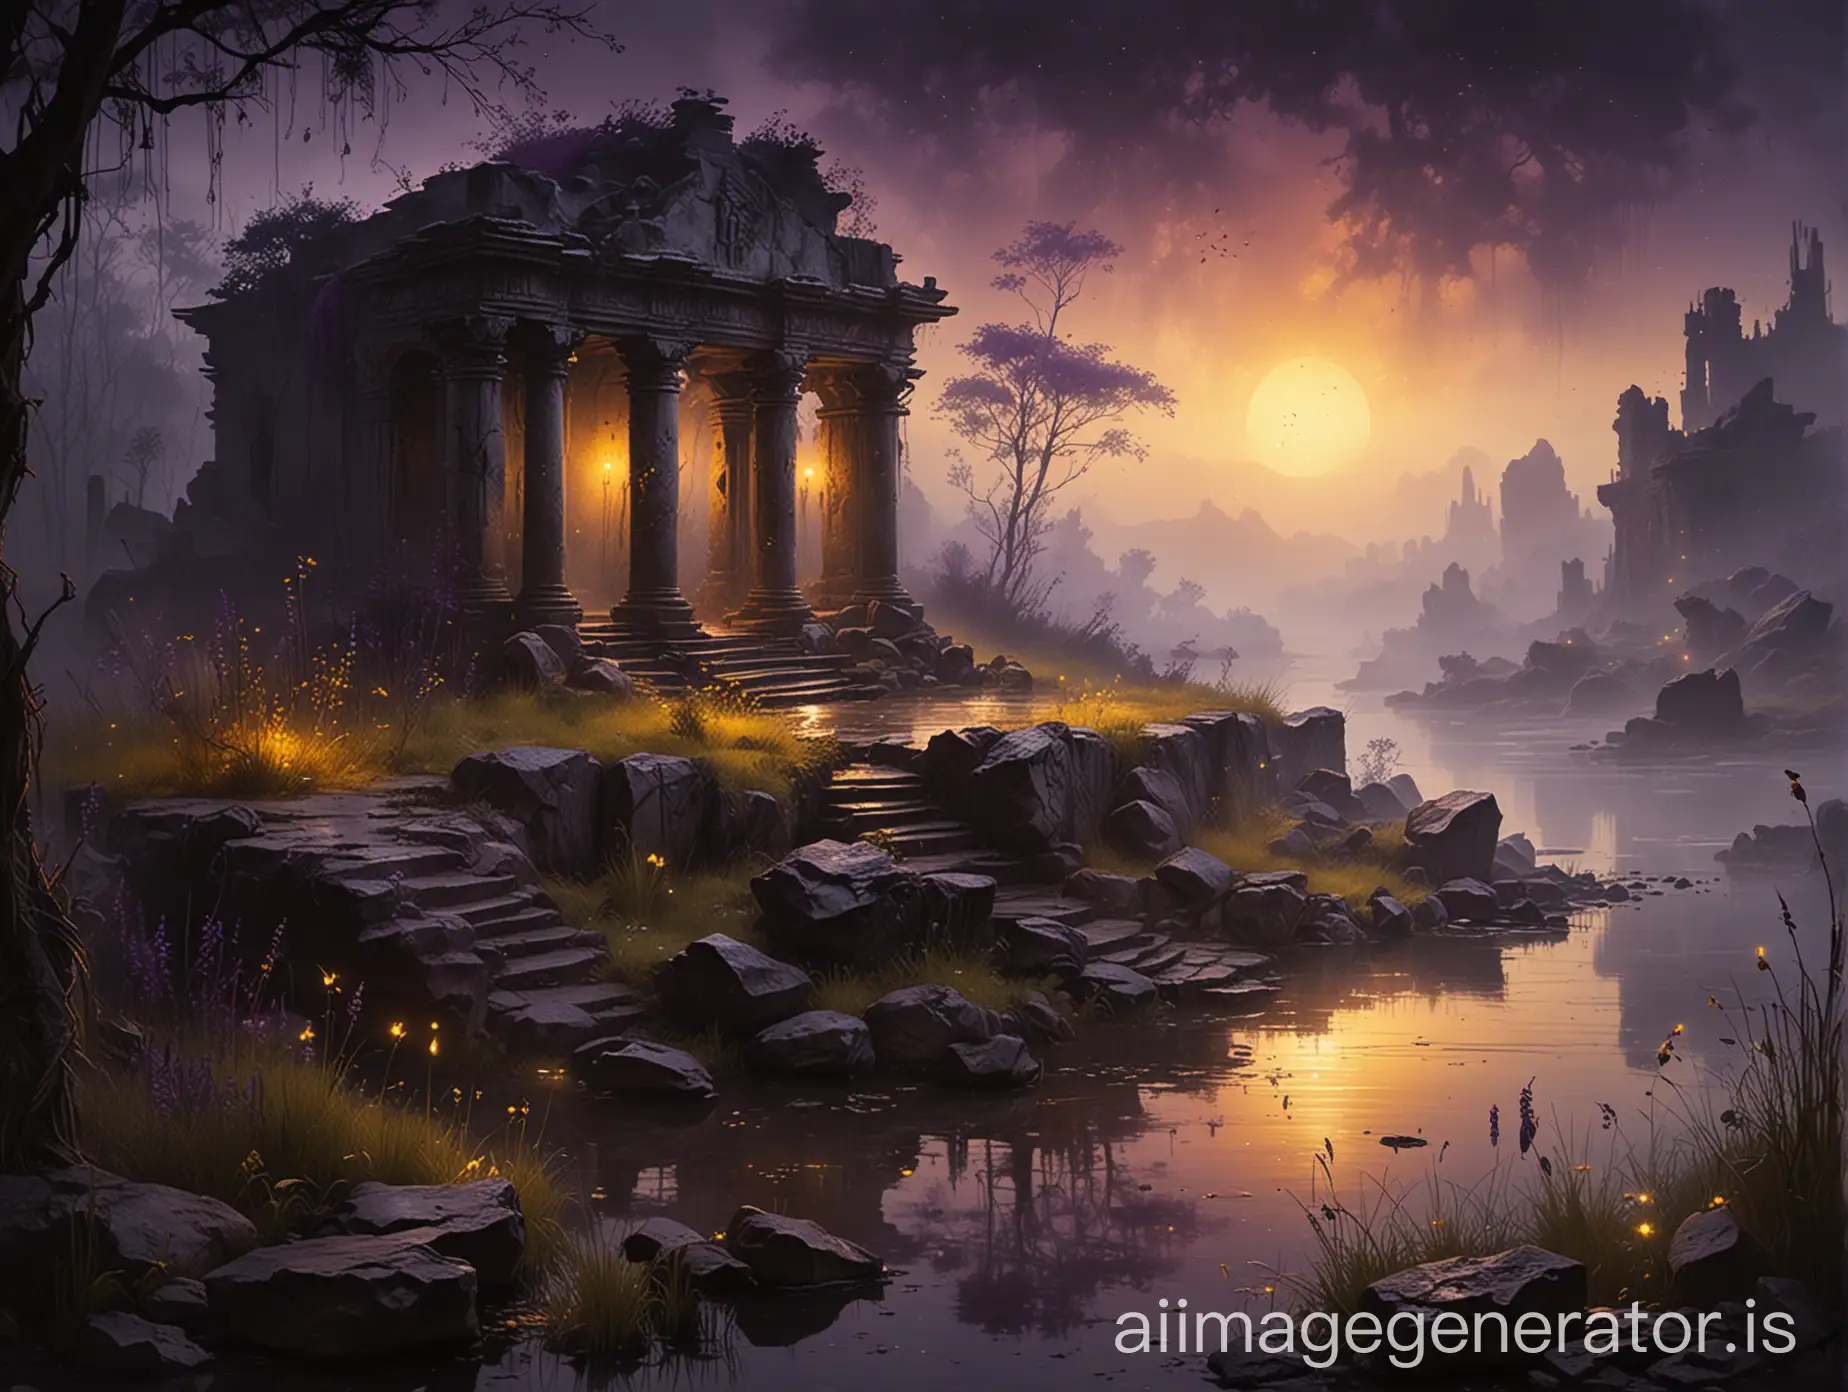 Fantasy-Dark-Art-Ancient-Ruins-in-Rainy-Garden-with-Fireflies-at-Sunset